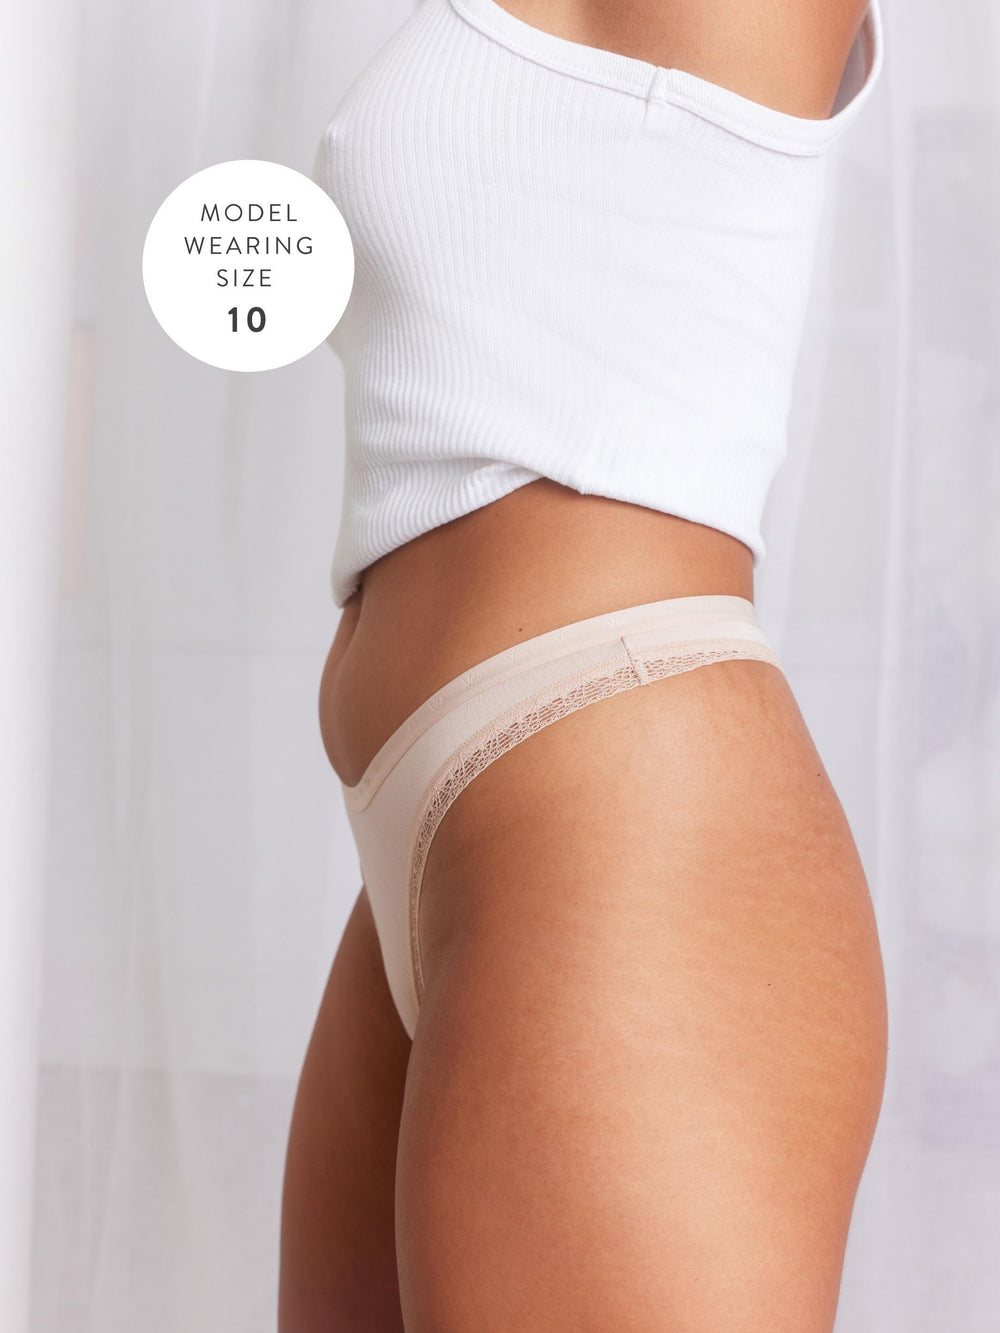 immi  Women's Bamboo Underwear Australia